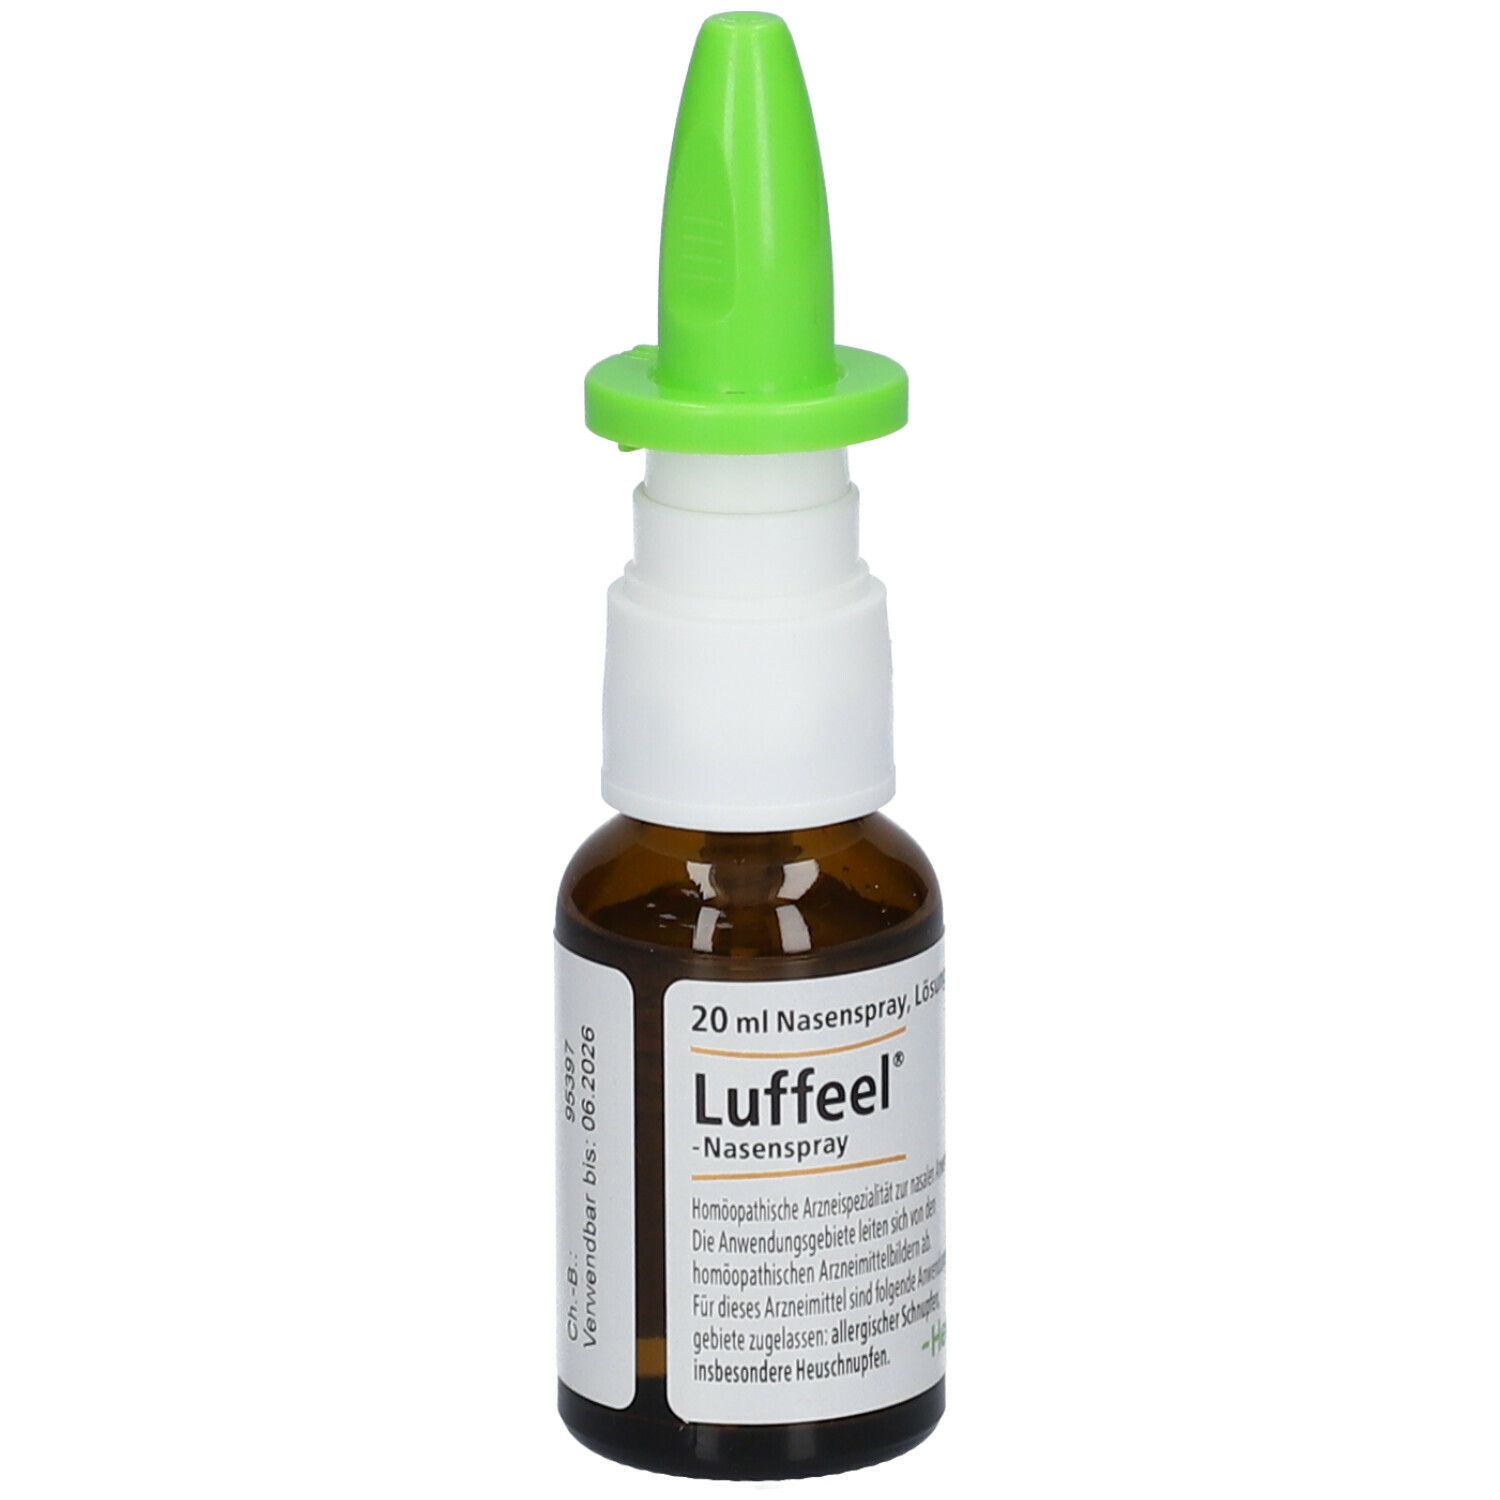 Luffeel®-Nasenspray